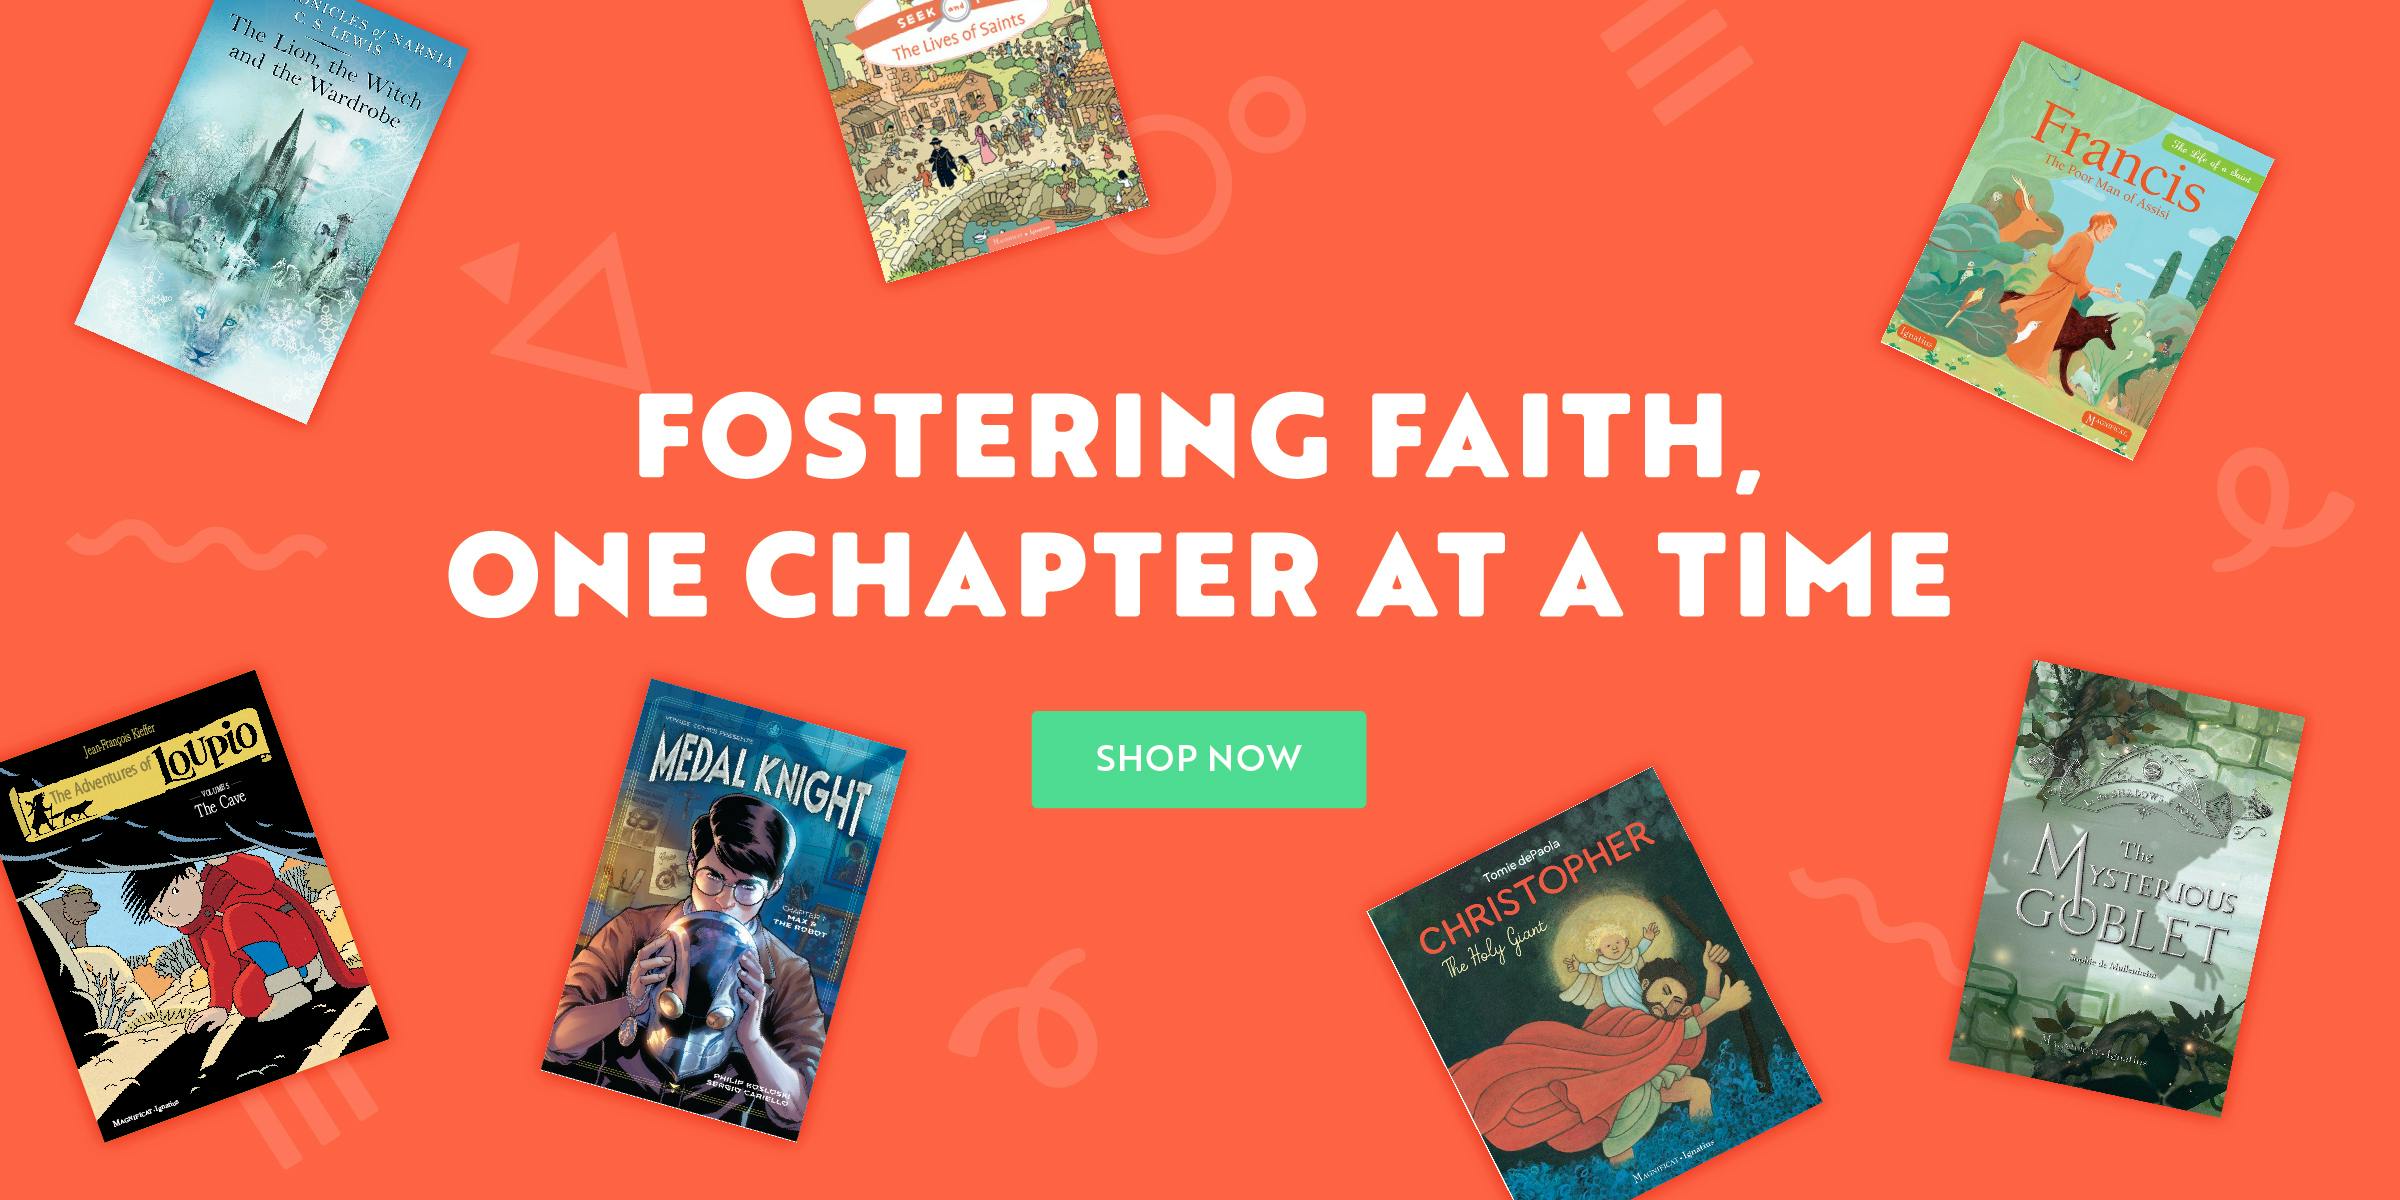 Fostering faith